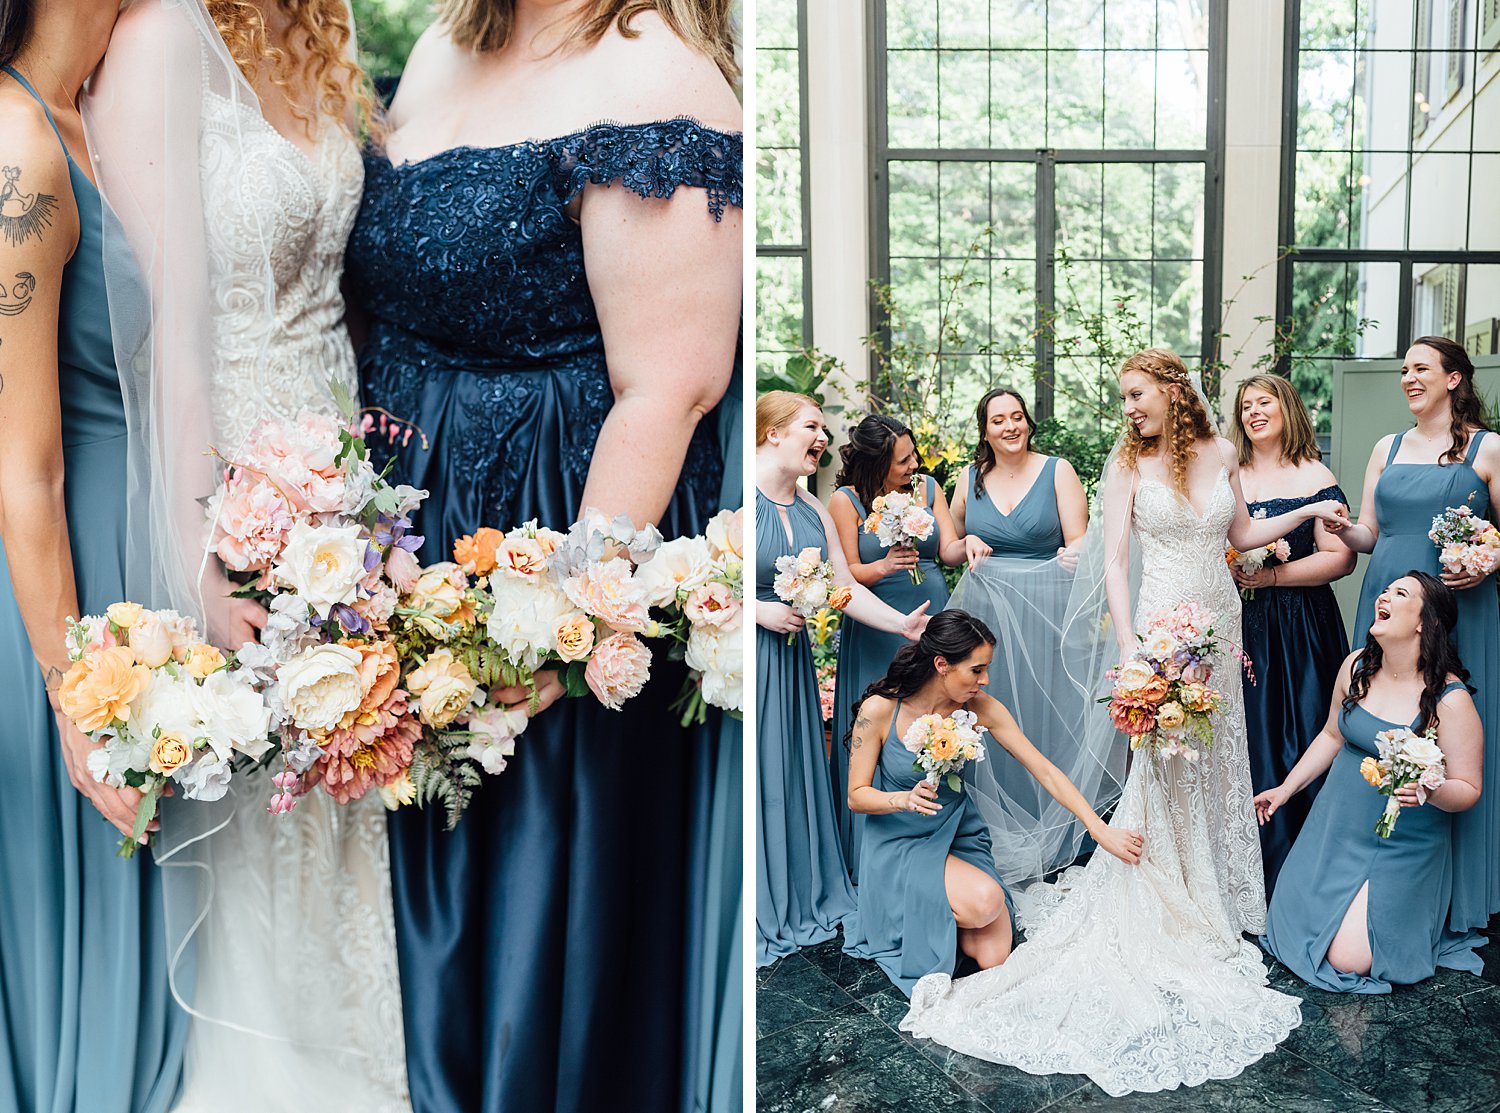 Allie + James - Winterthur Wedding - Philadelphia Wedding Photographer - Alison Dunn Photography photo